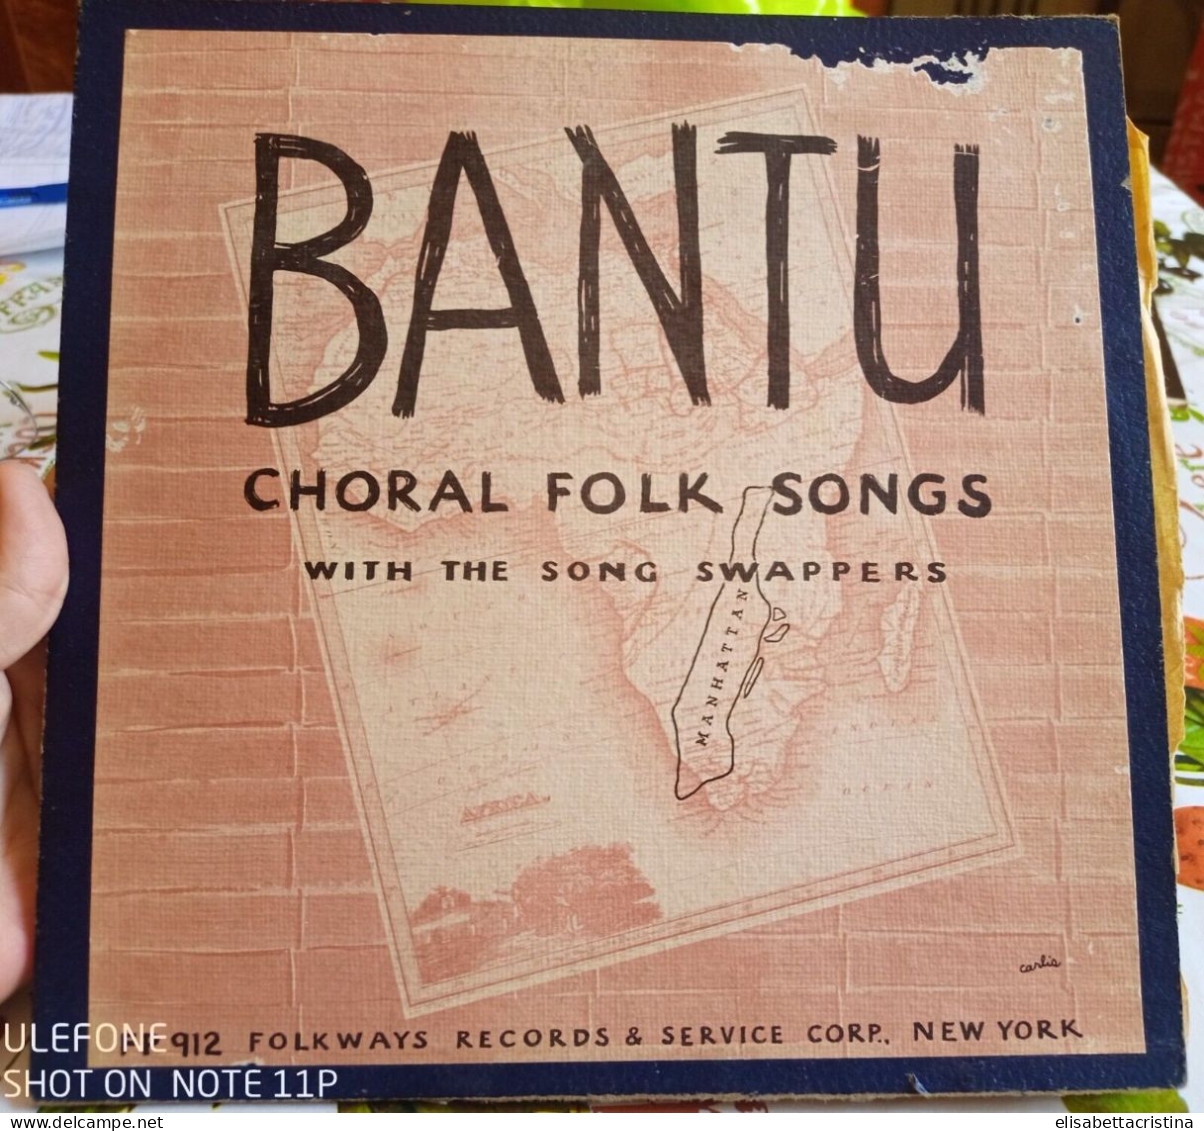 Lp 33 Giri "Bantu" 1955 - Country Et Folk